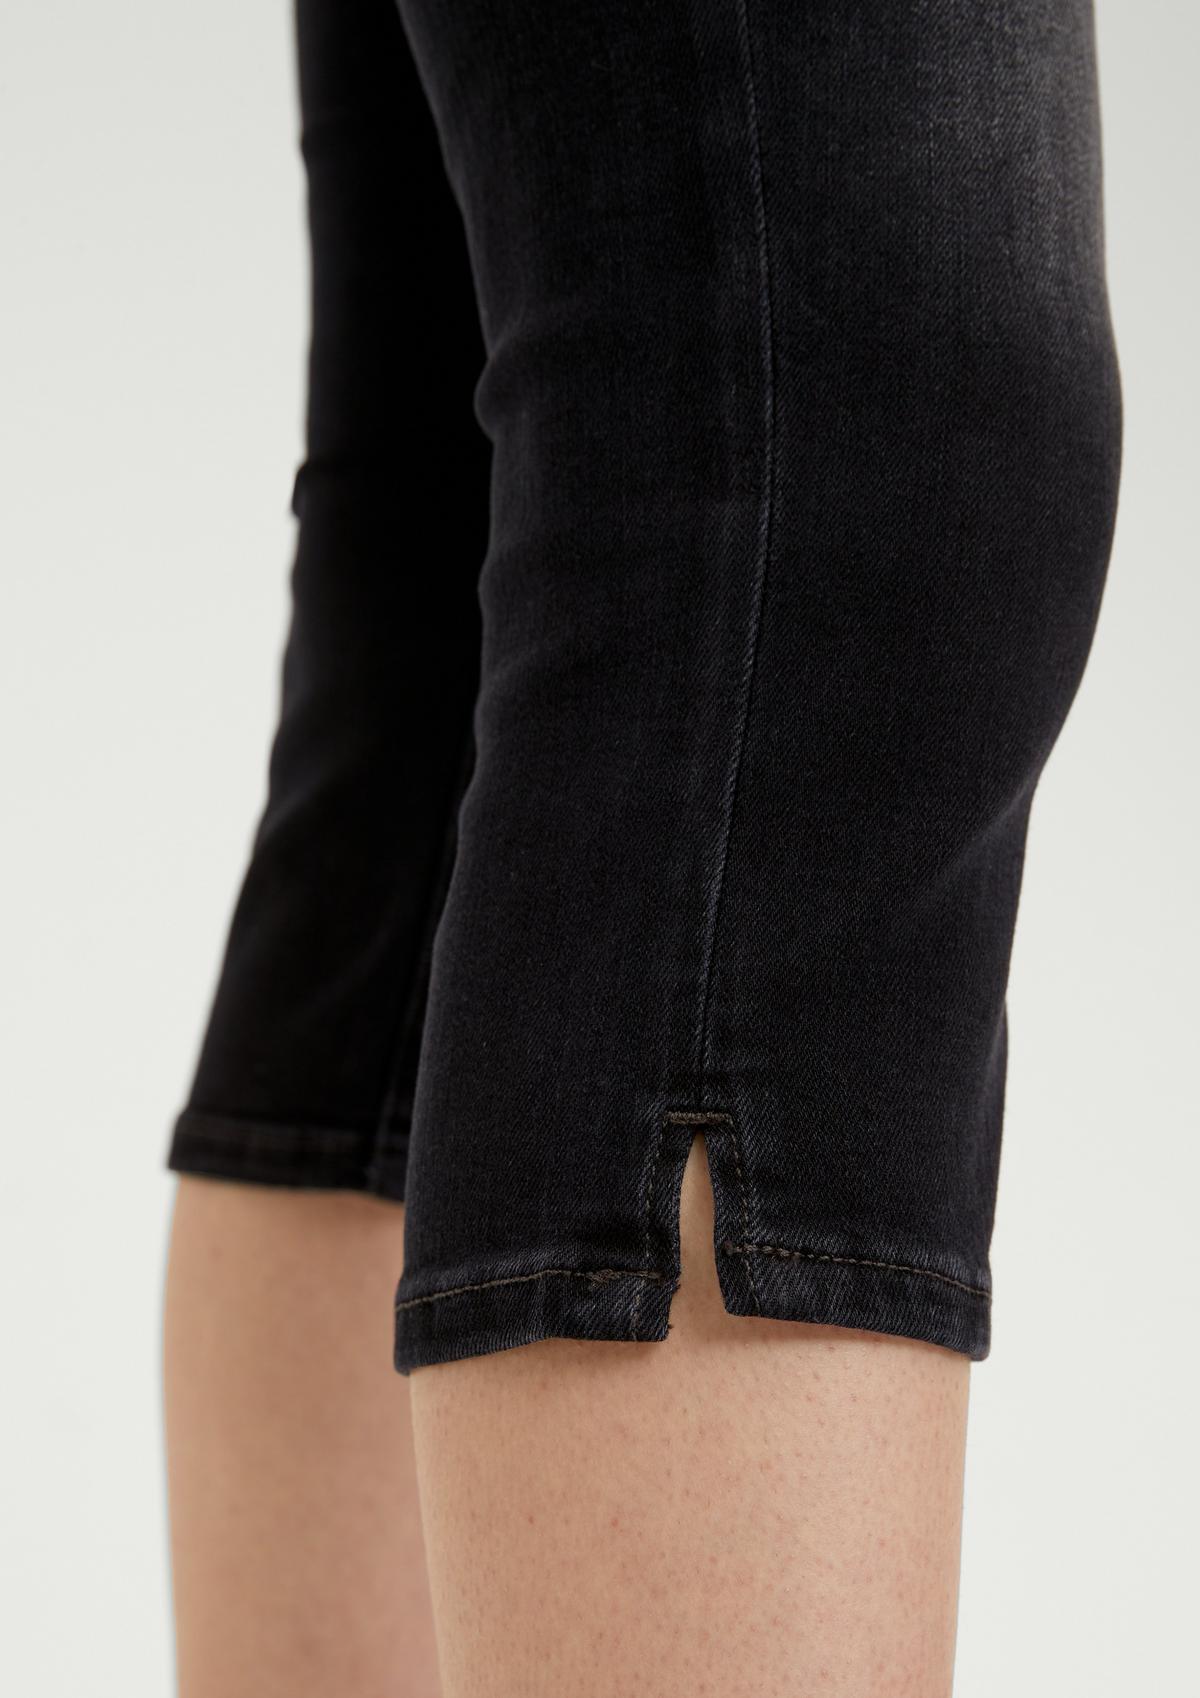 s.Oliver Betsy ankle jeans / slim fit / mid rise / slim leg